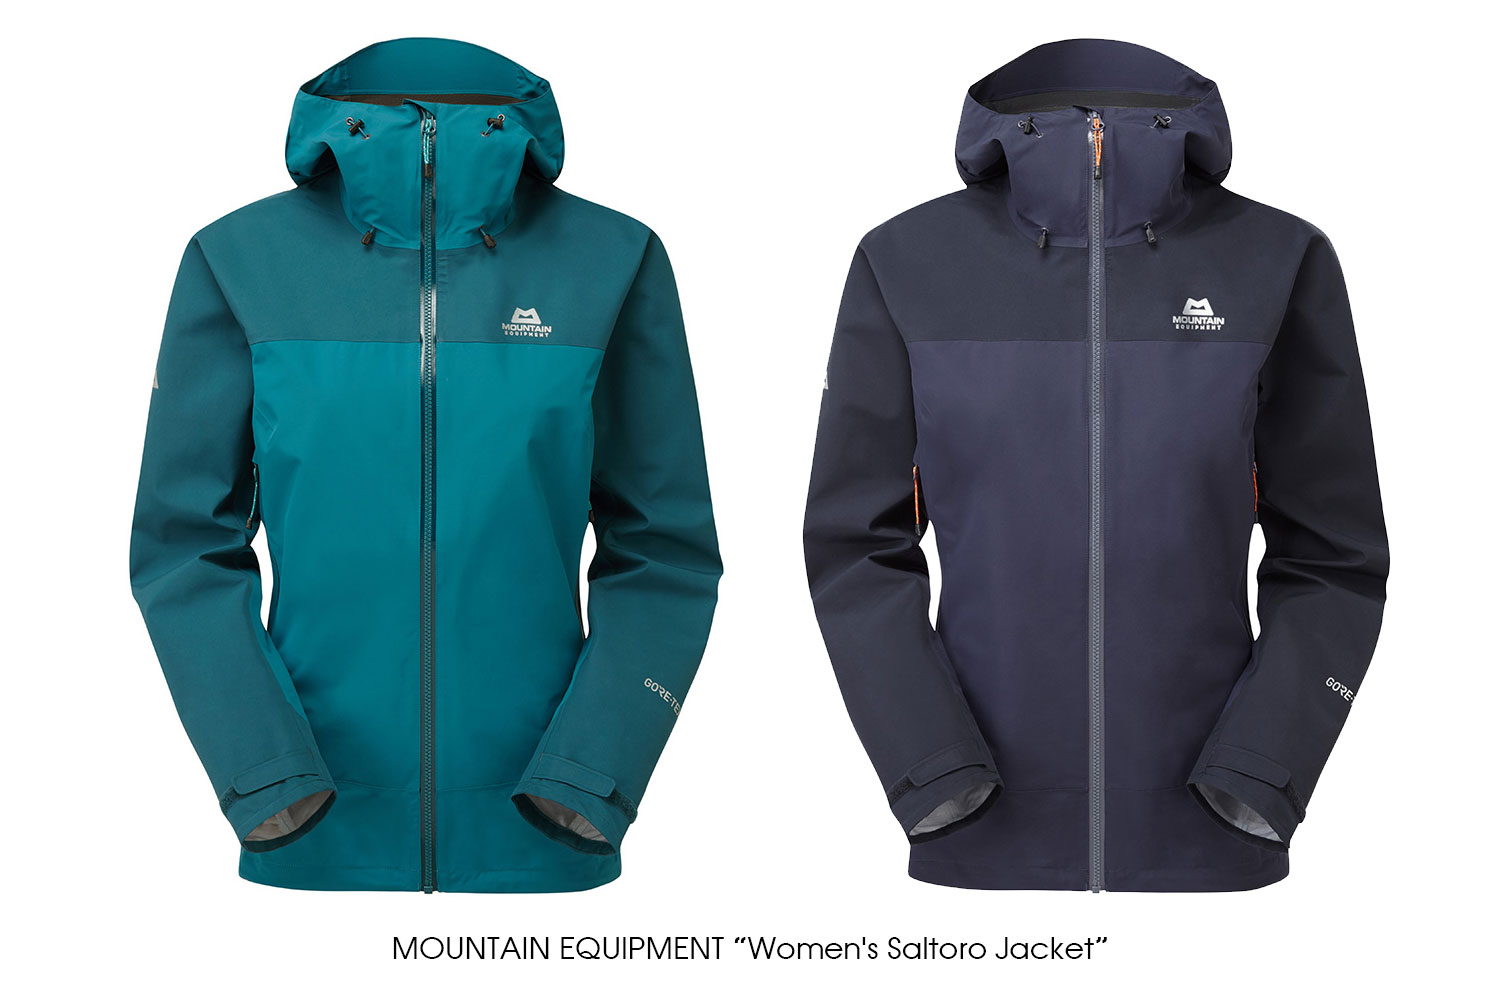 MOUNTAIN EQUIPMENT "Women's Saltoro Jacket"